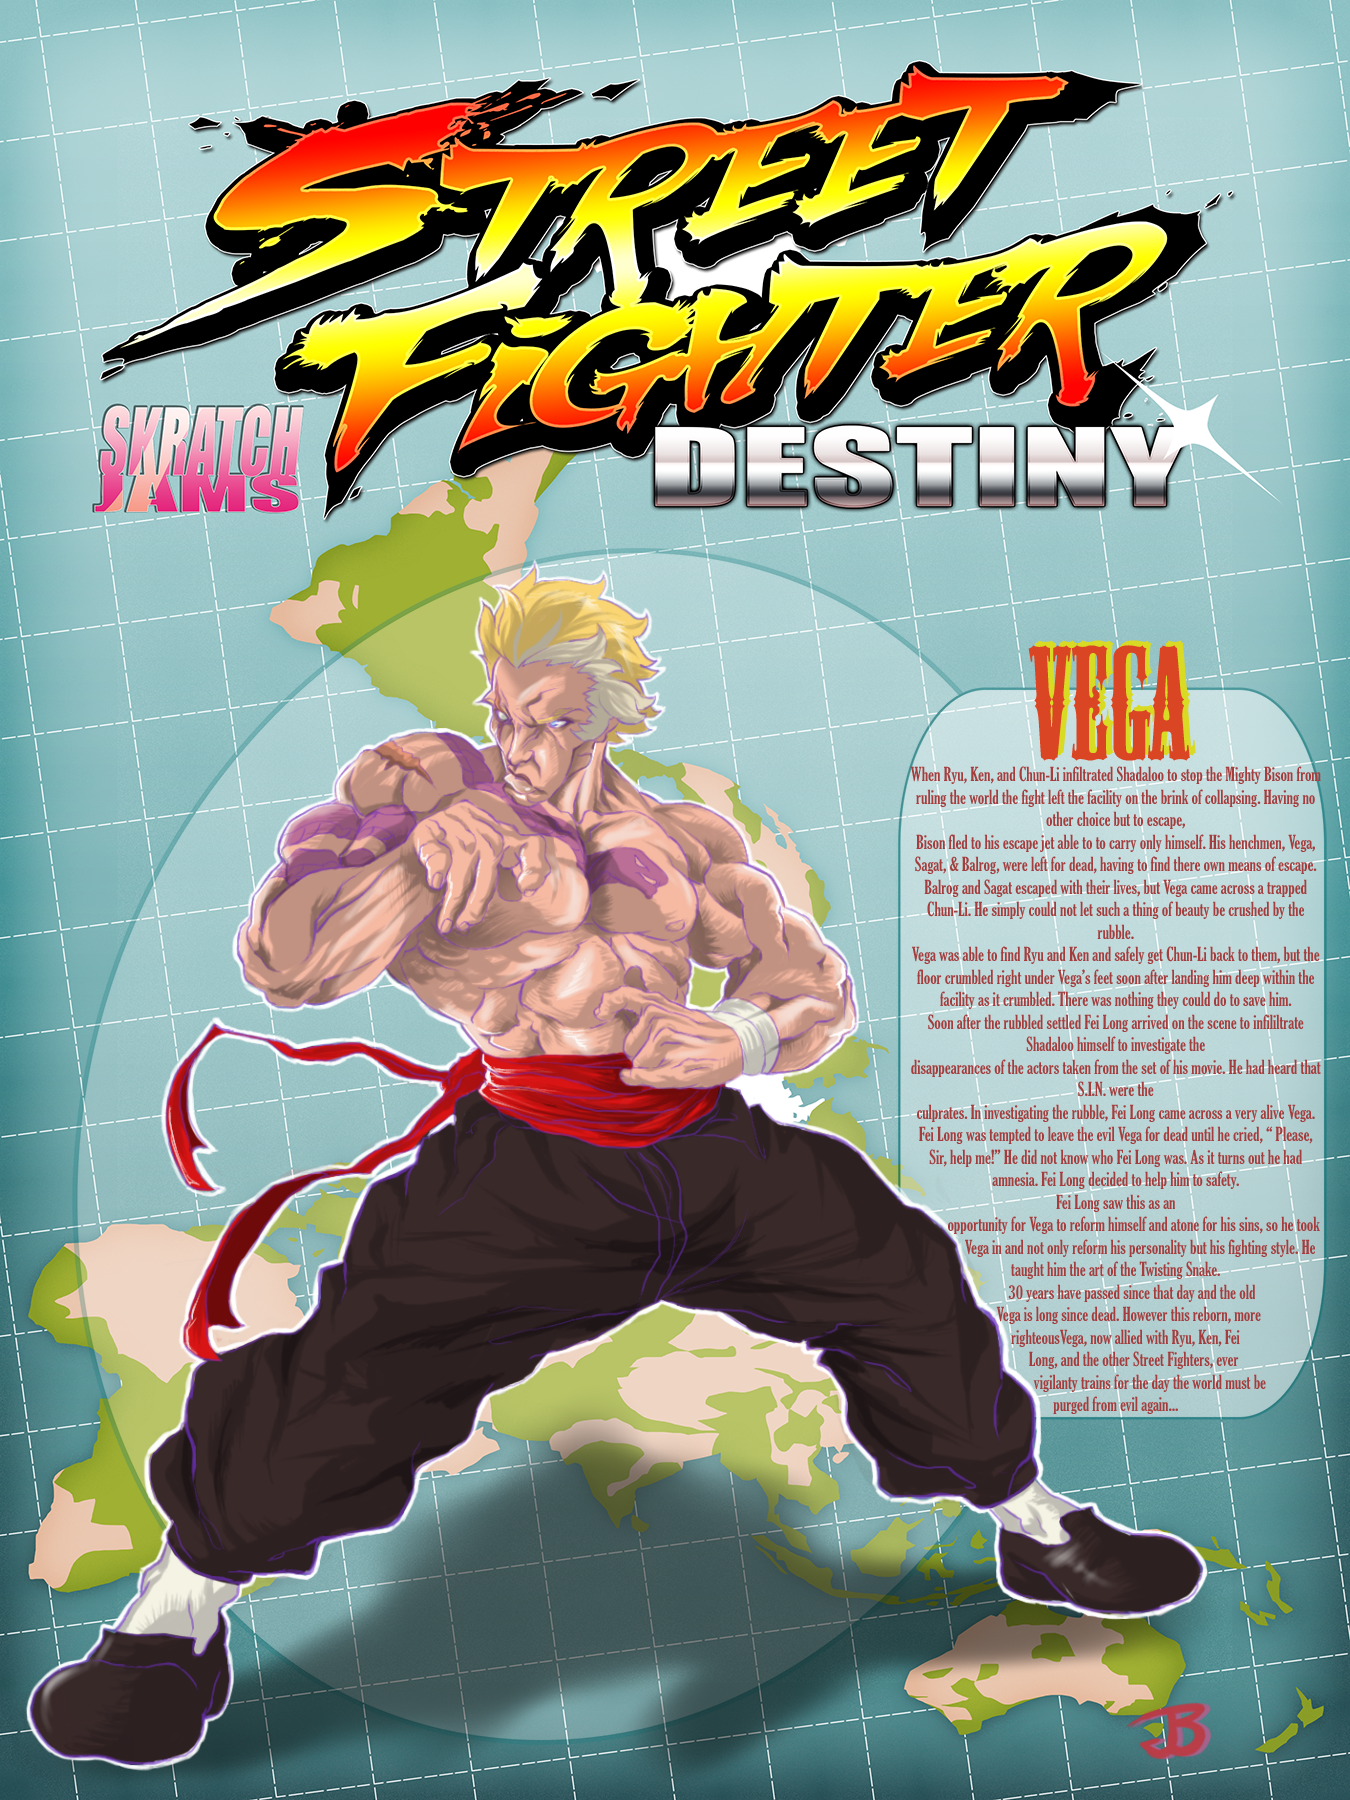 Fashion Vega - Street Fighter Duel by AkashiYasuto on DeviantArt